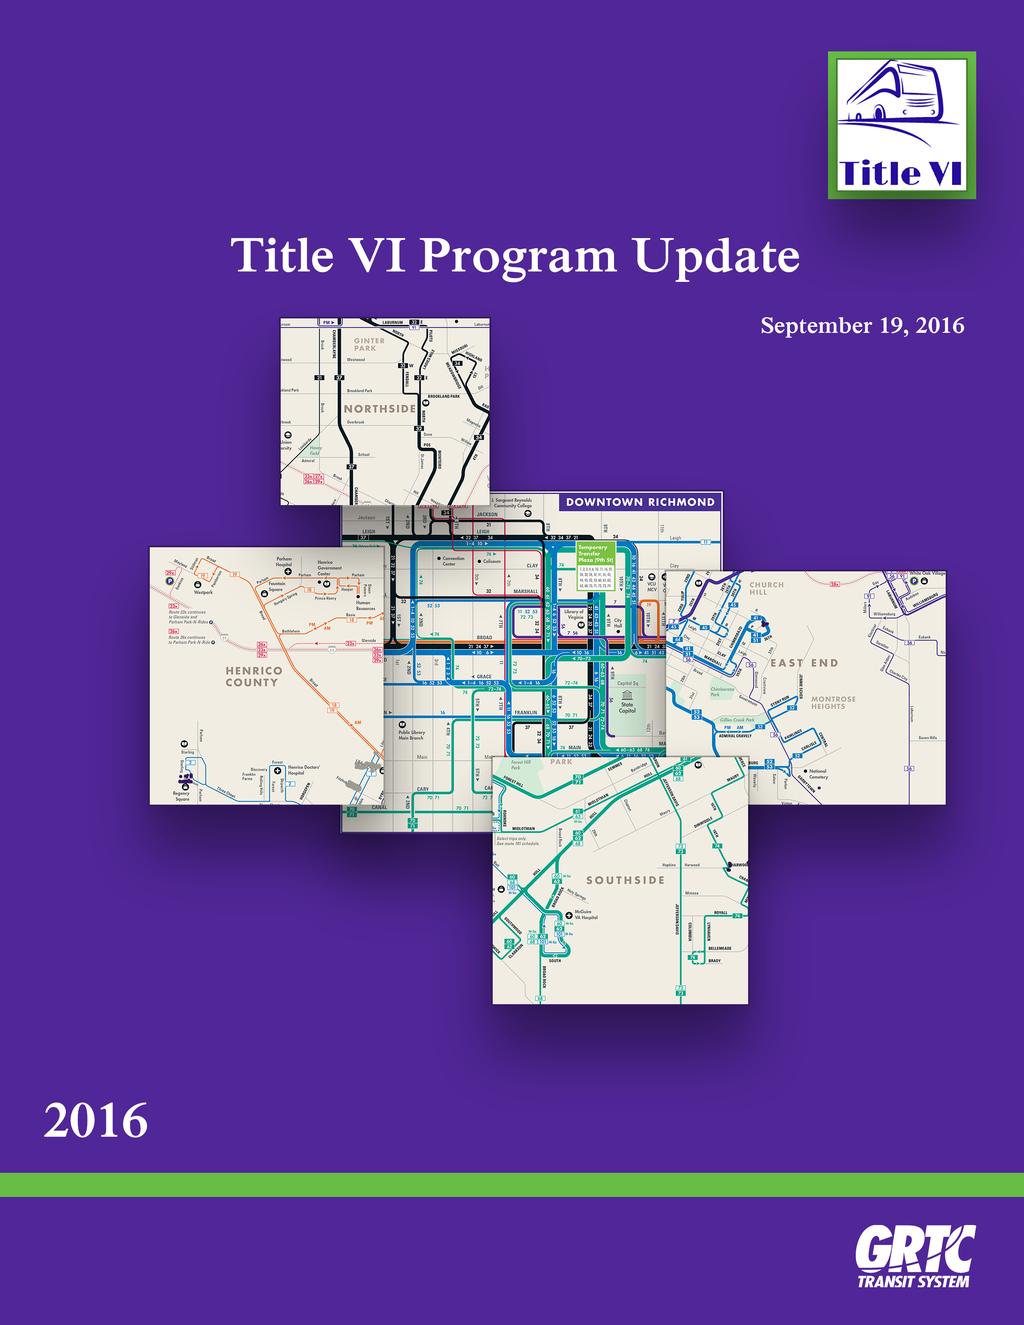 GRTC Transit System 2016 Program